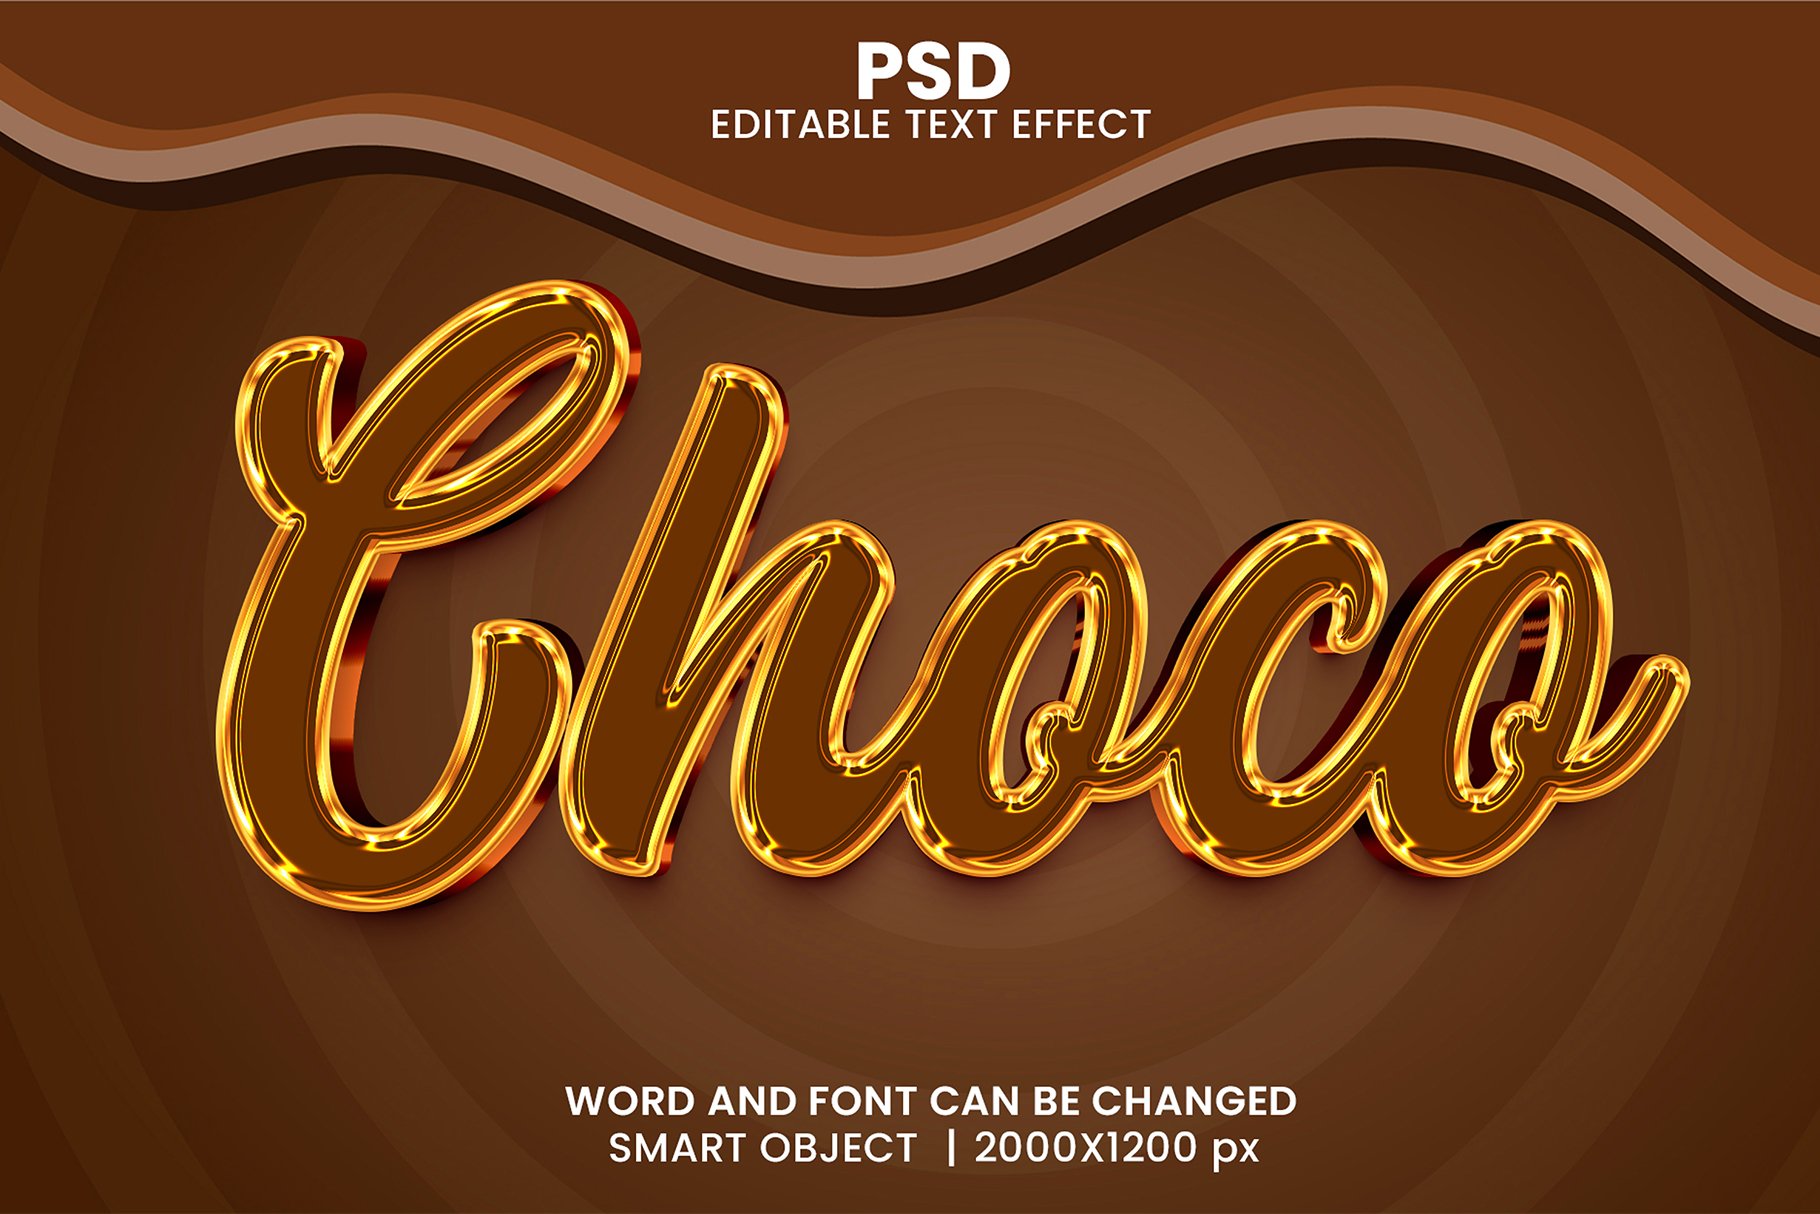 Choco 3d Editable Psd Text Effectcover image.